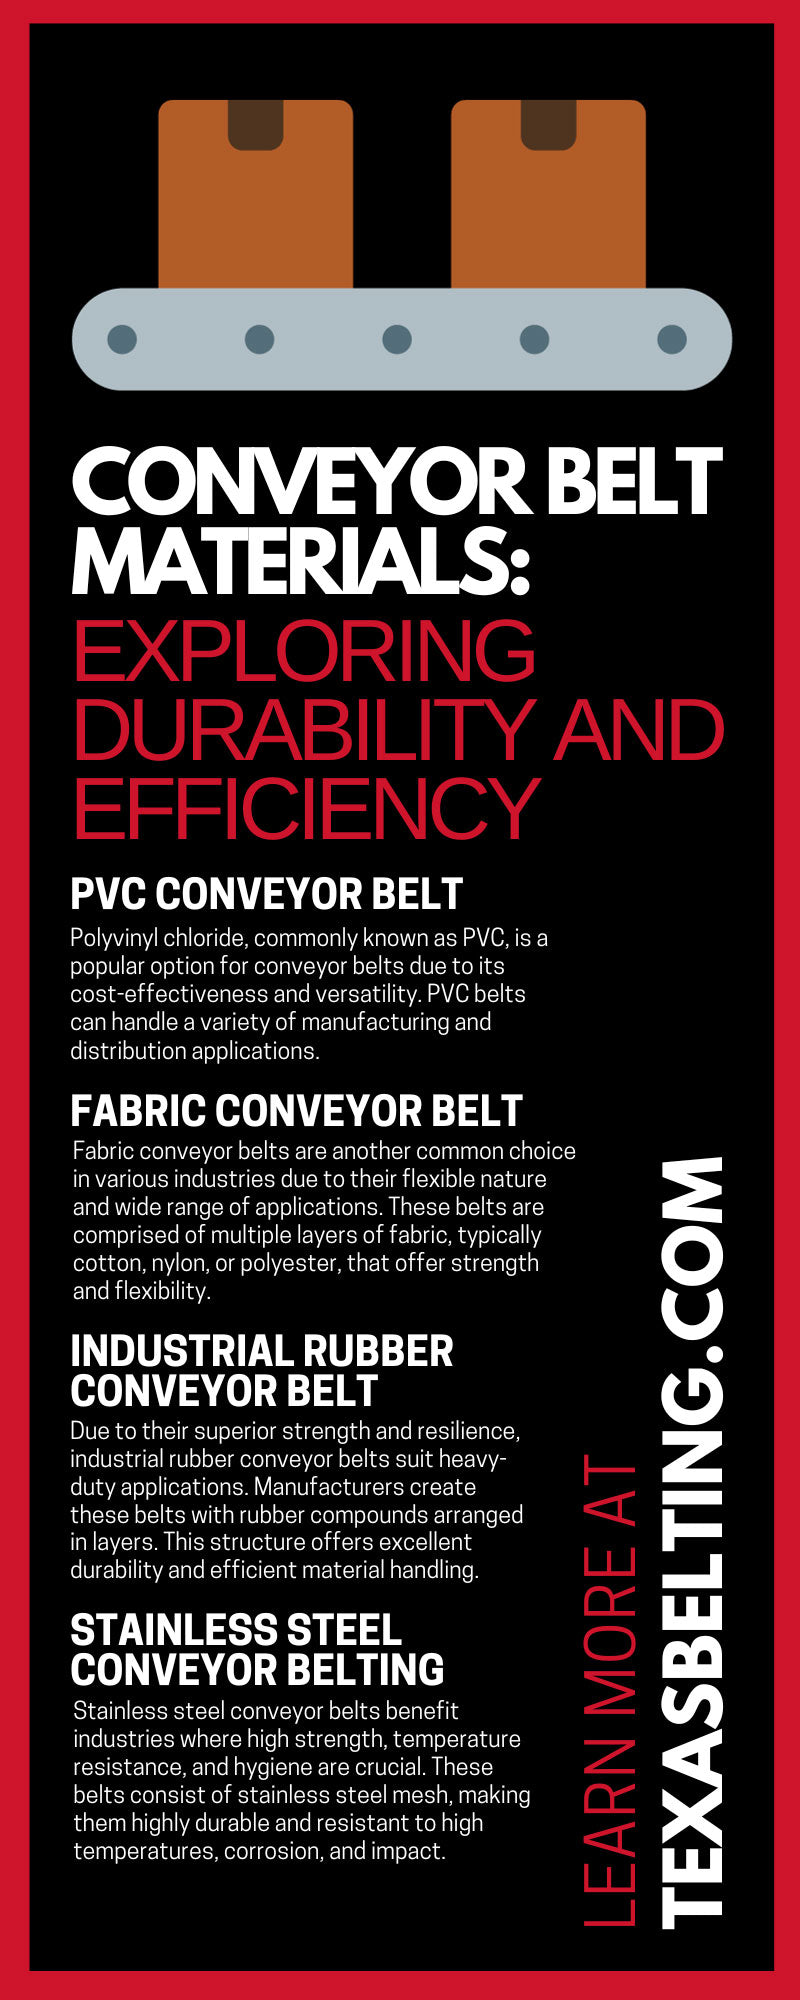 Conveyor Belt Materials: Exploring Durability and Efficiency